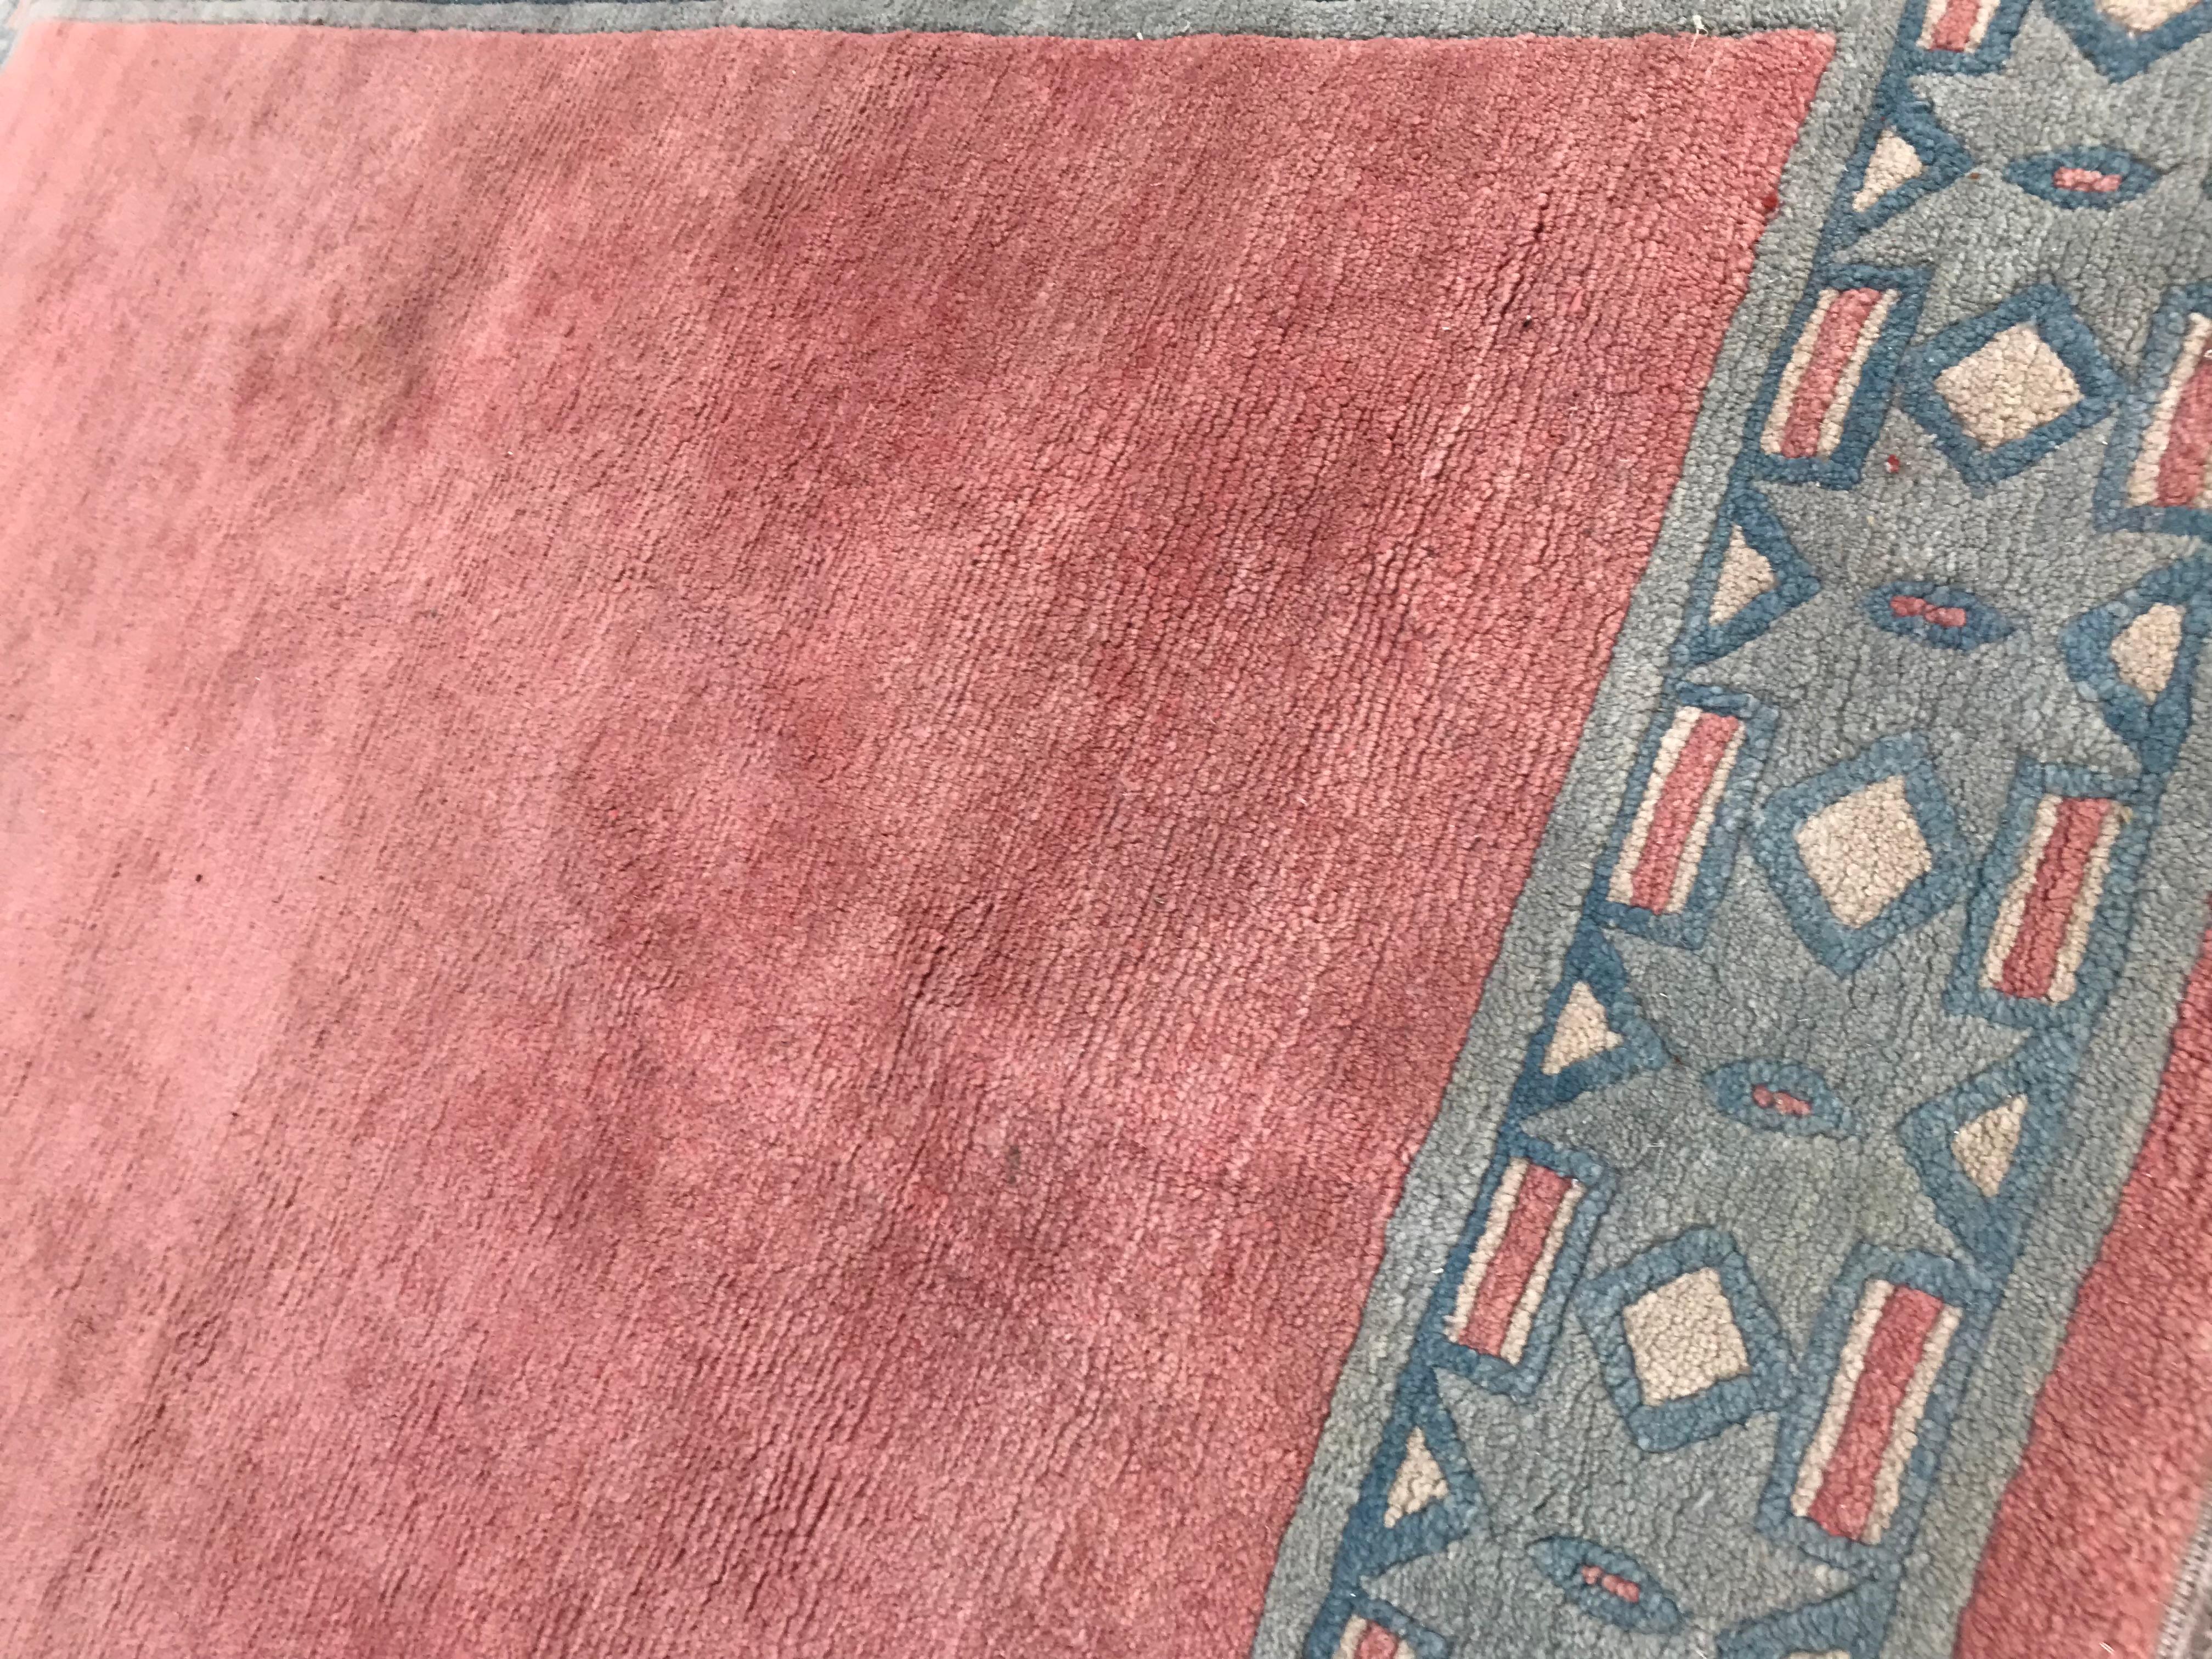 A modern Tibetan Nepal rug, circa 1980 wool velvet on cotton foundation, good conditions.